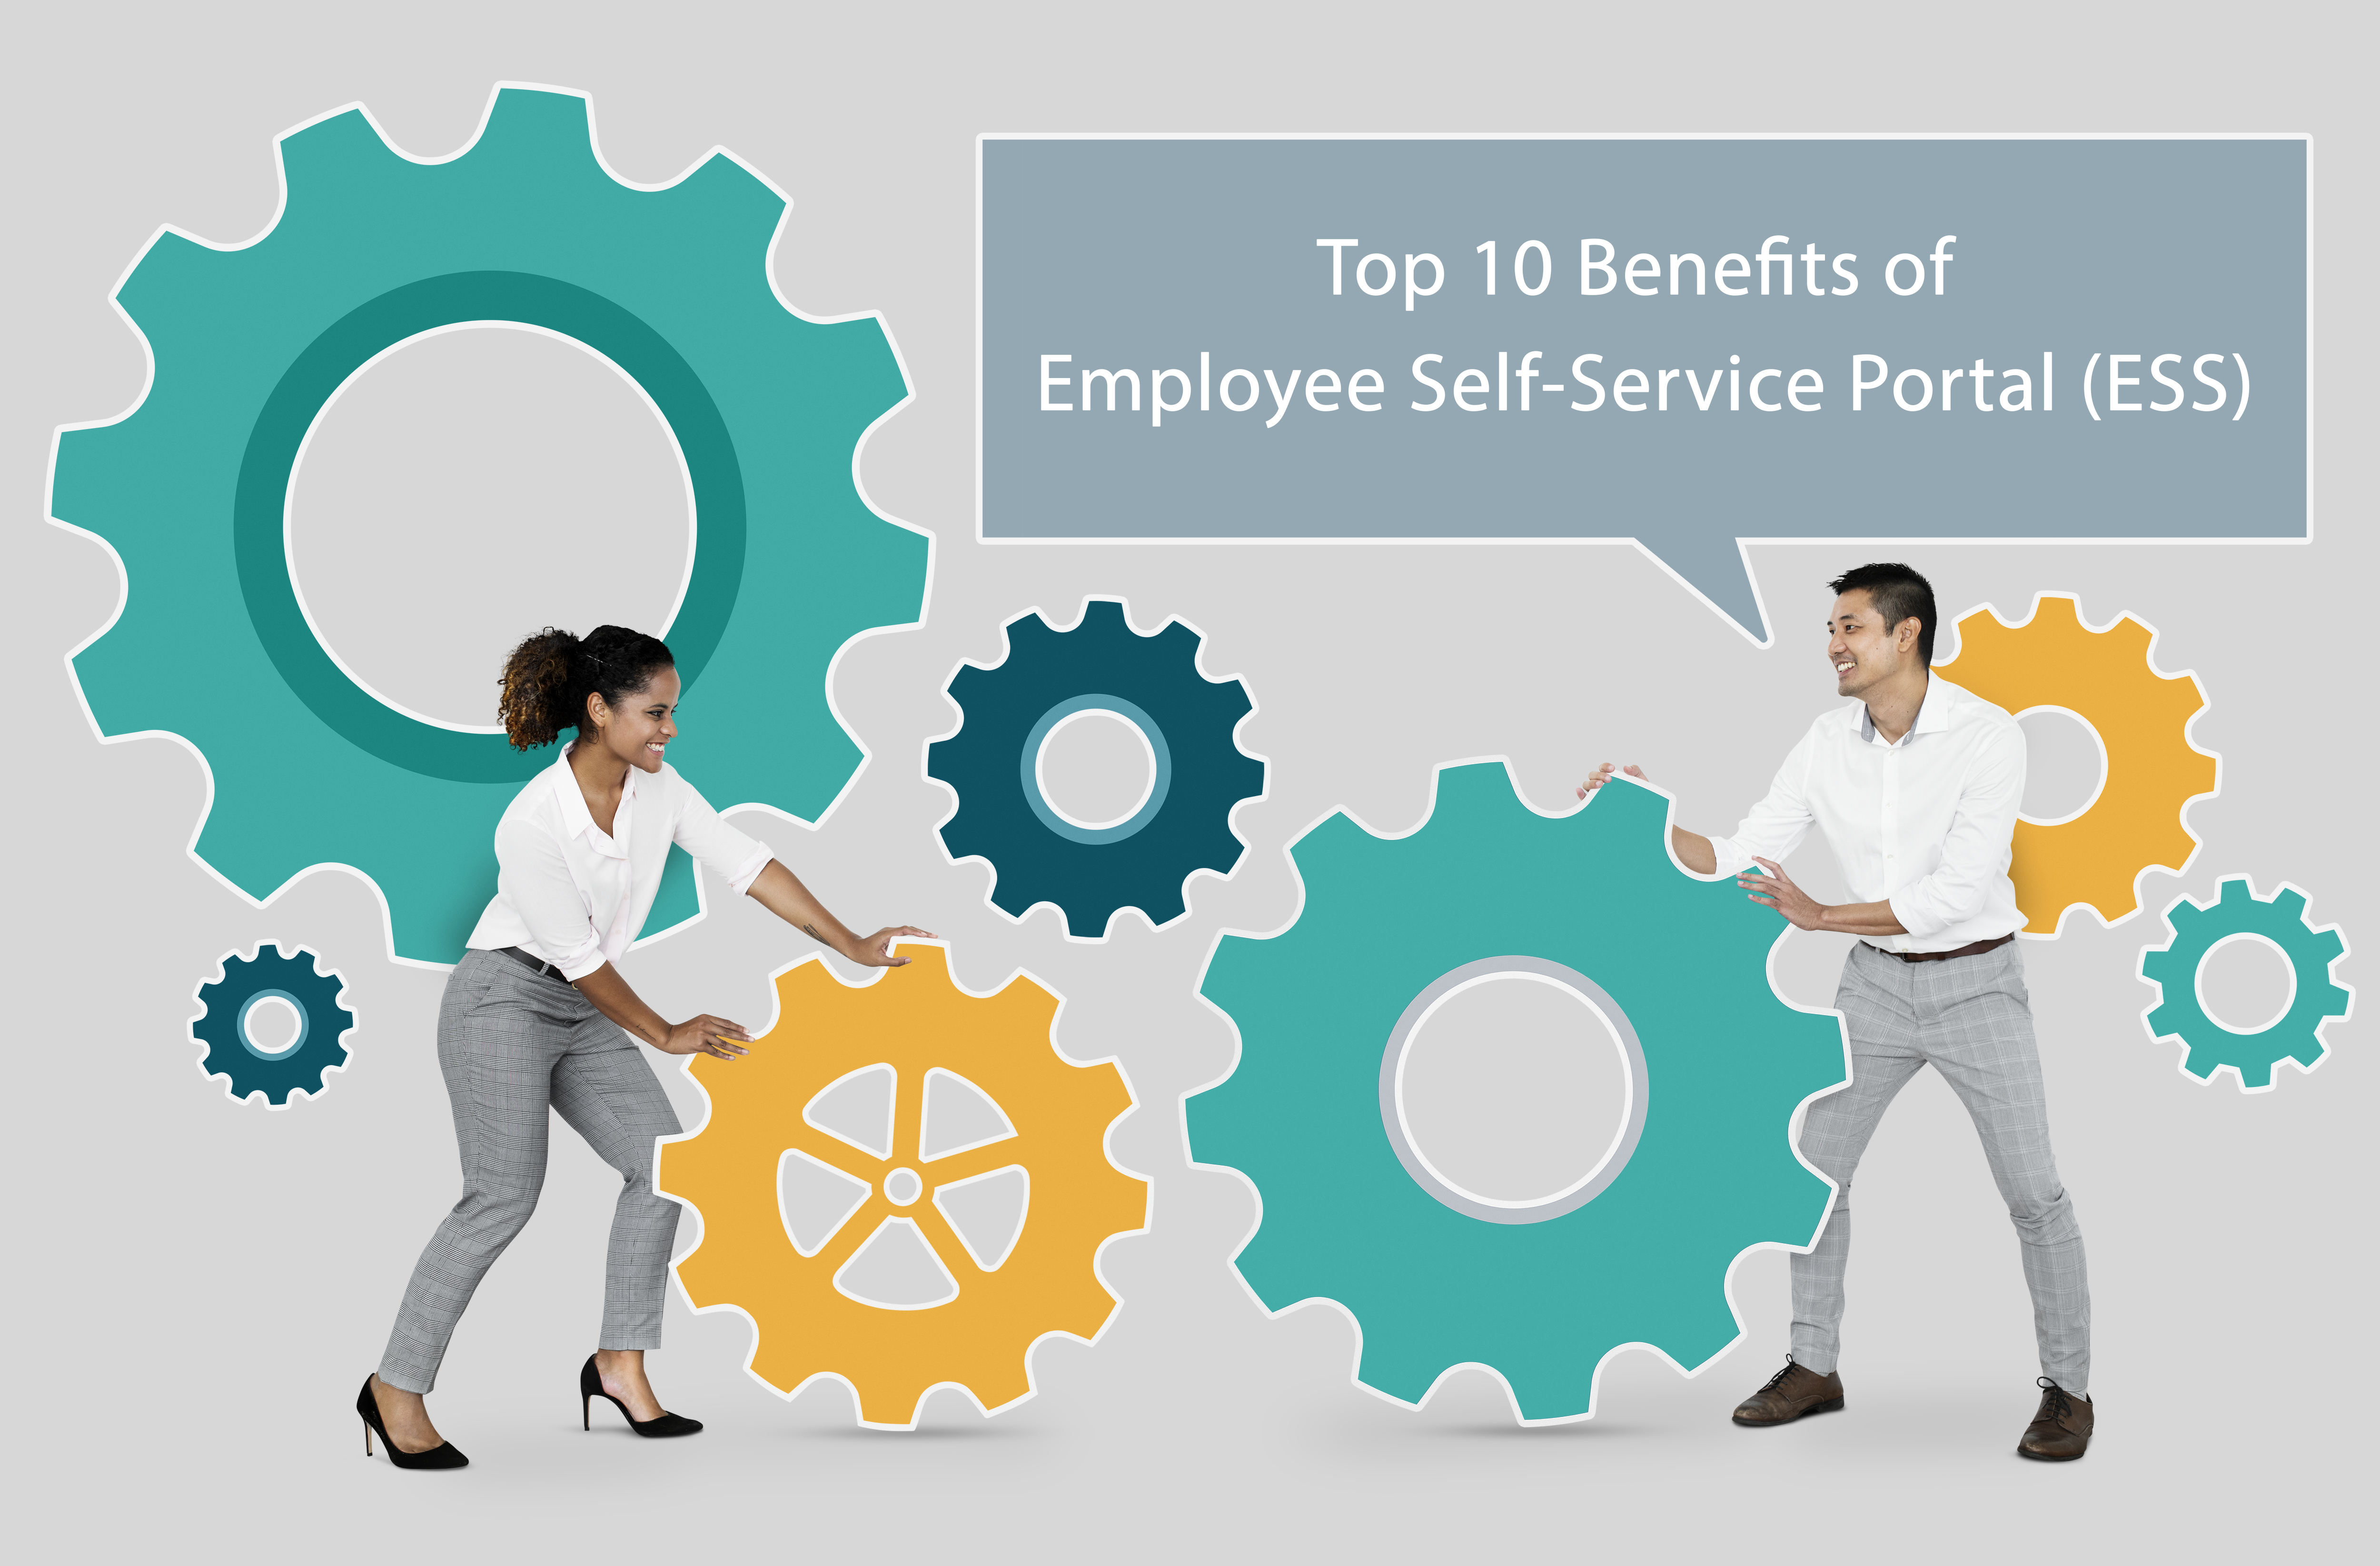 Top 10 Benefits of Employee Self-Service Portal (ESS)